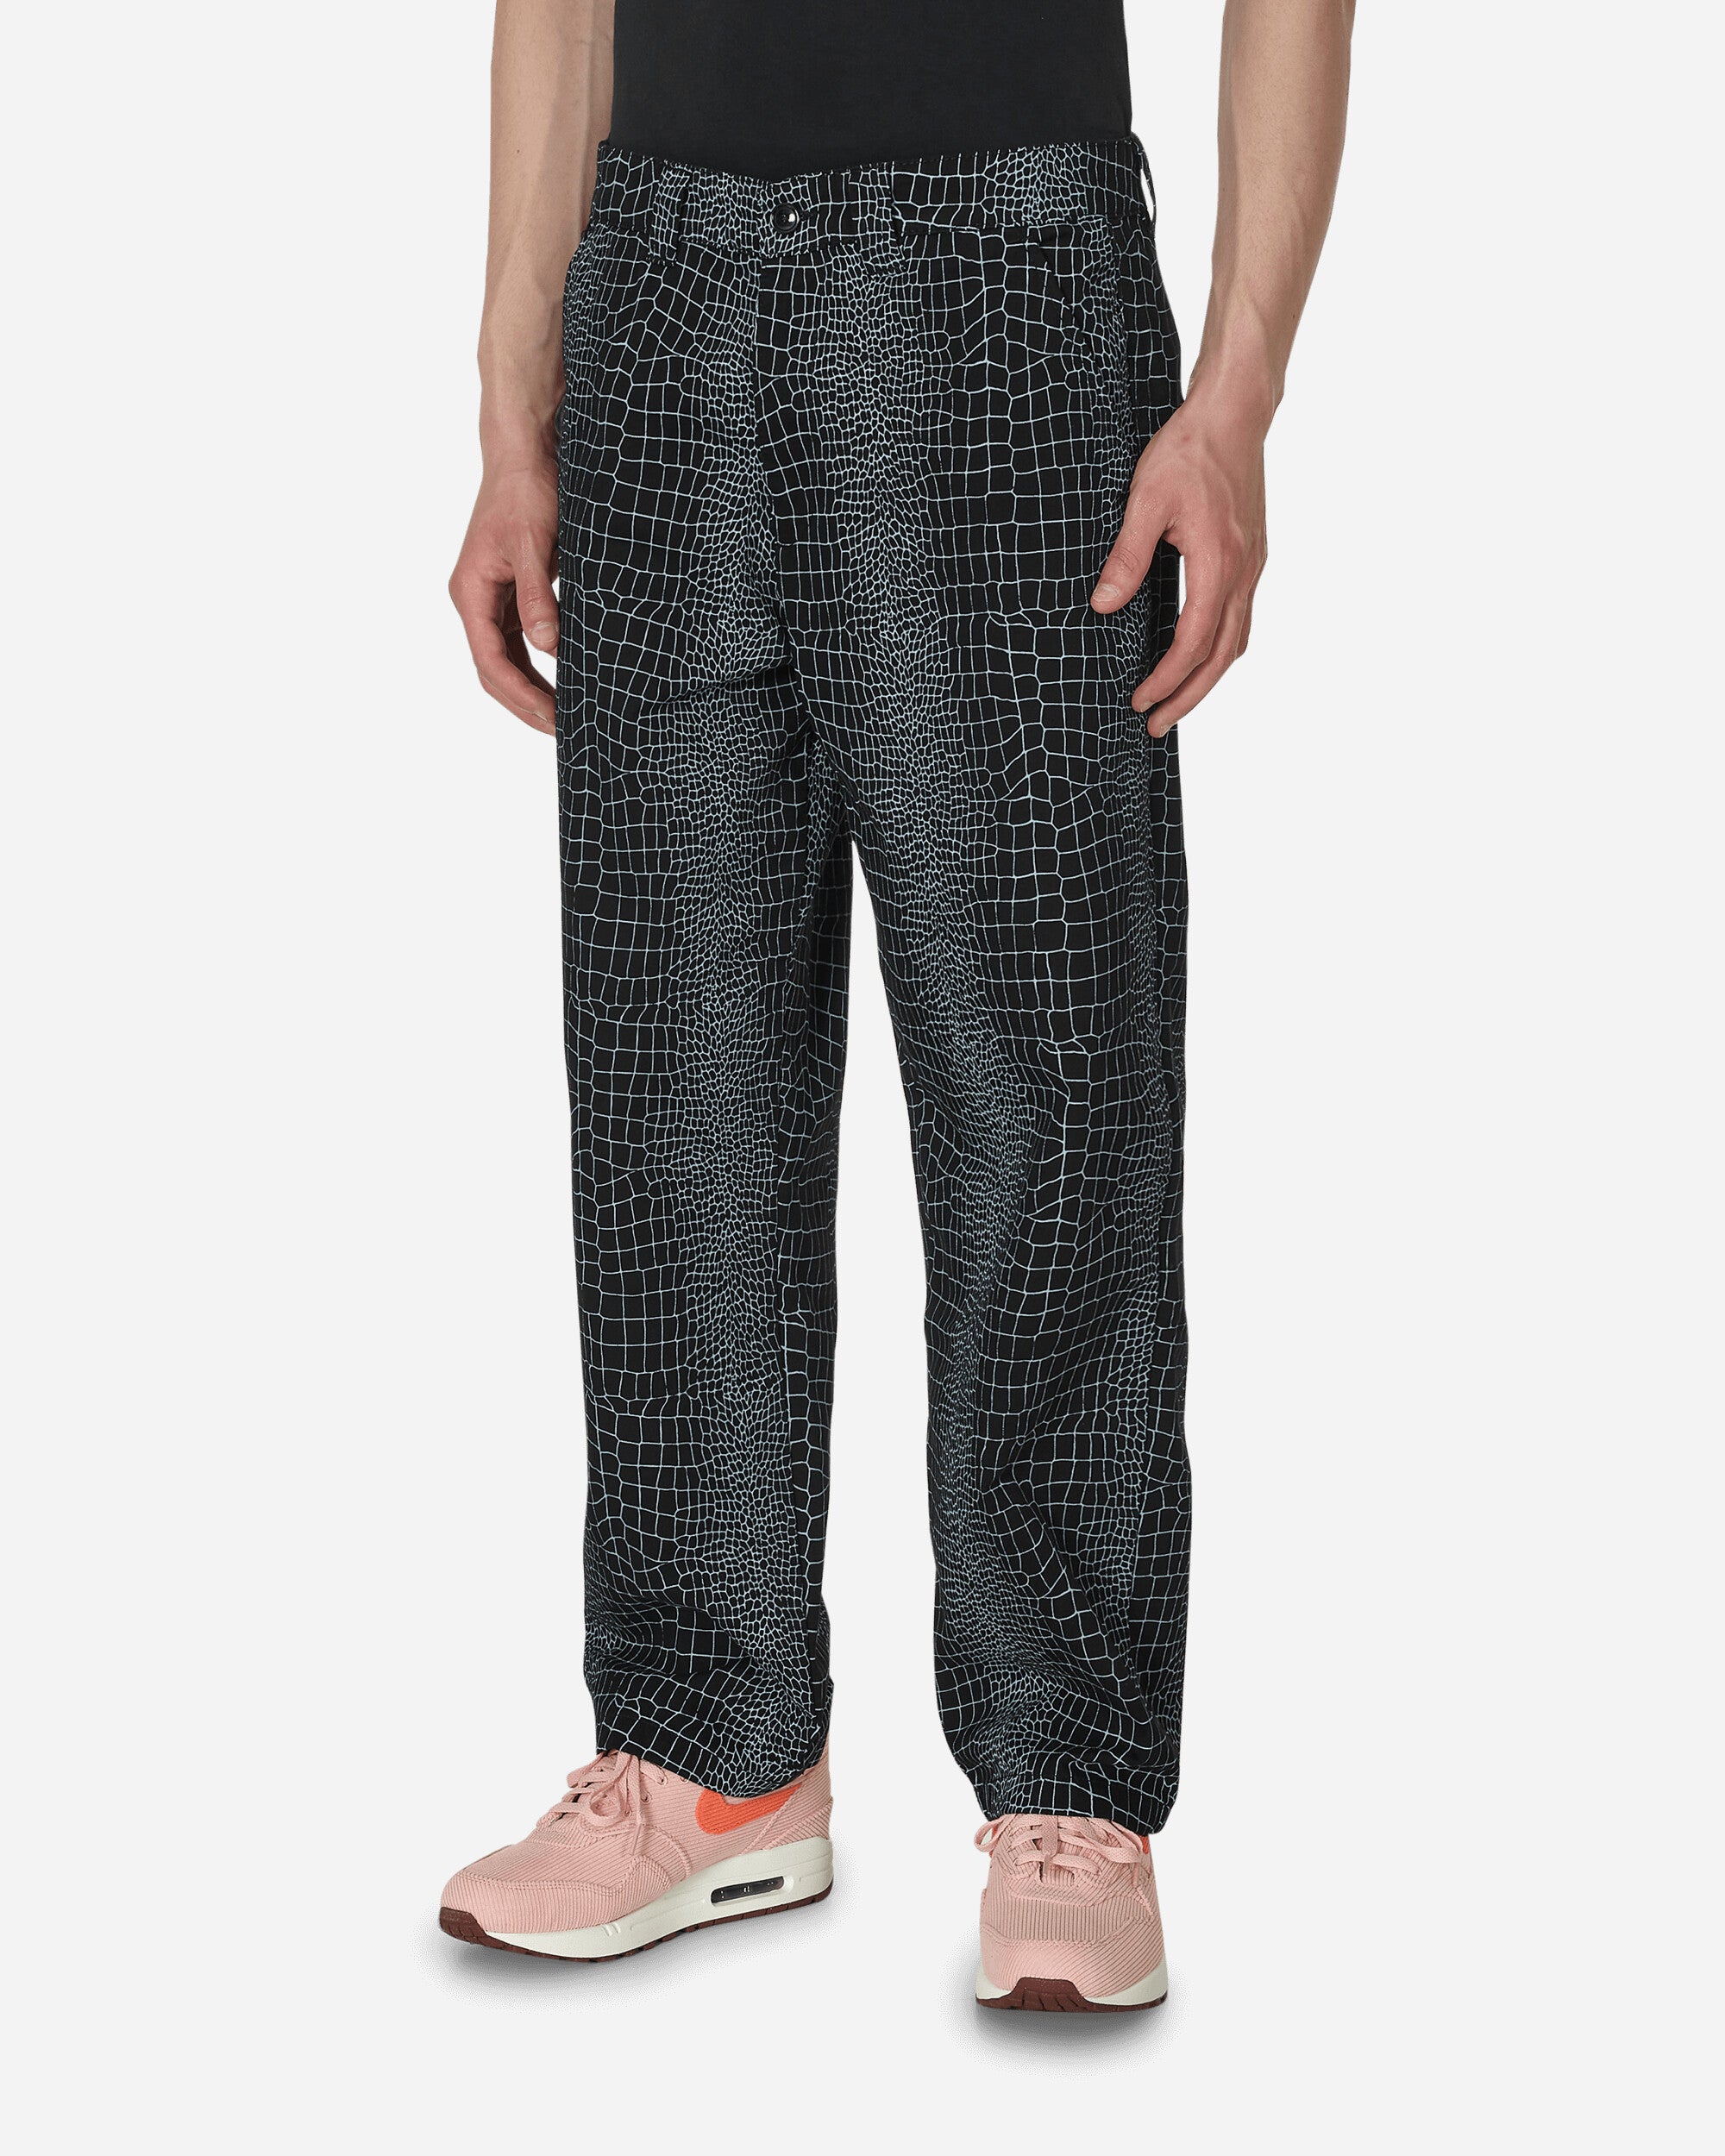 Imitation leather trousers - Black/Crocodile-patterned - Ladies | H&M